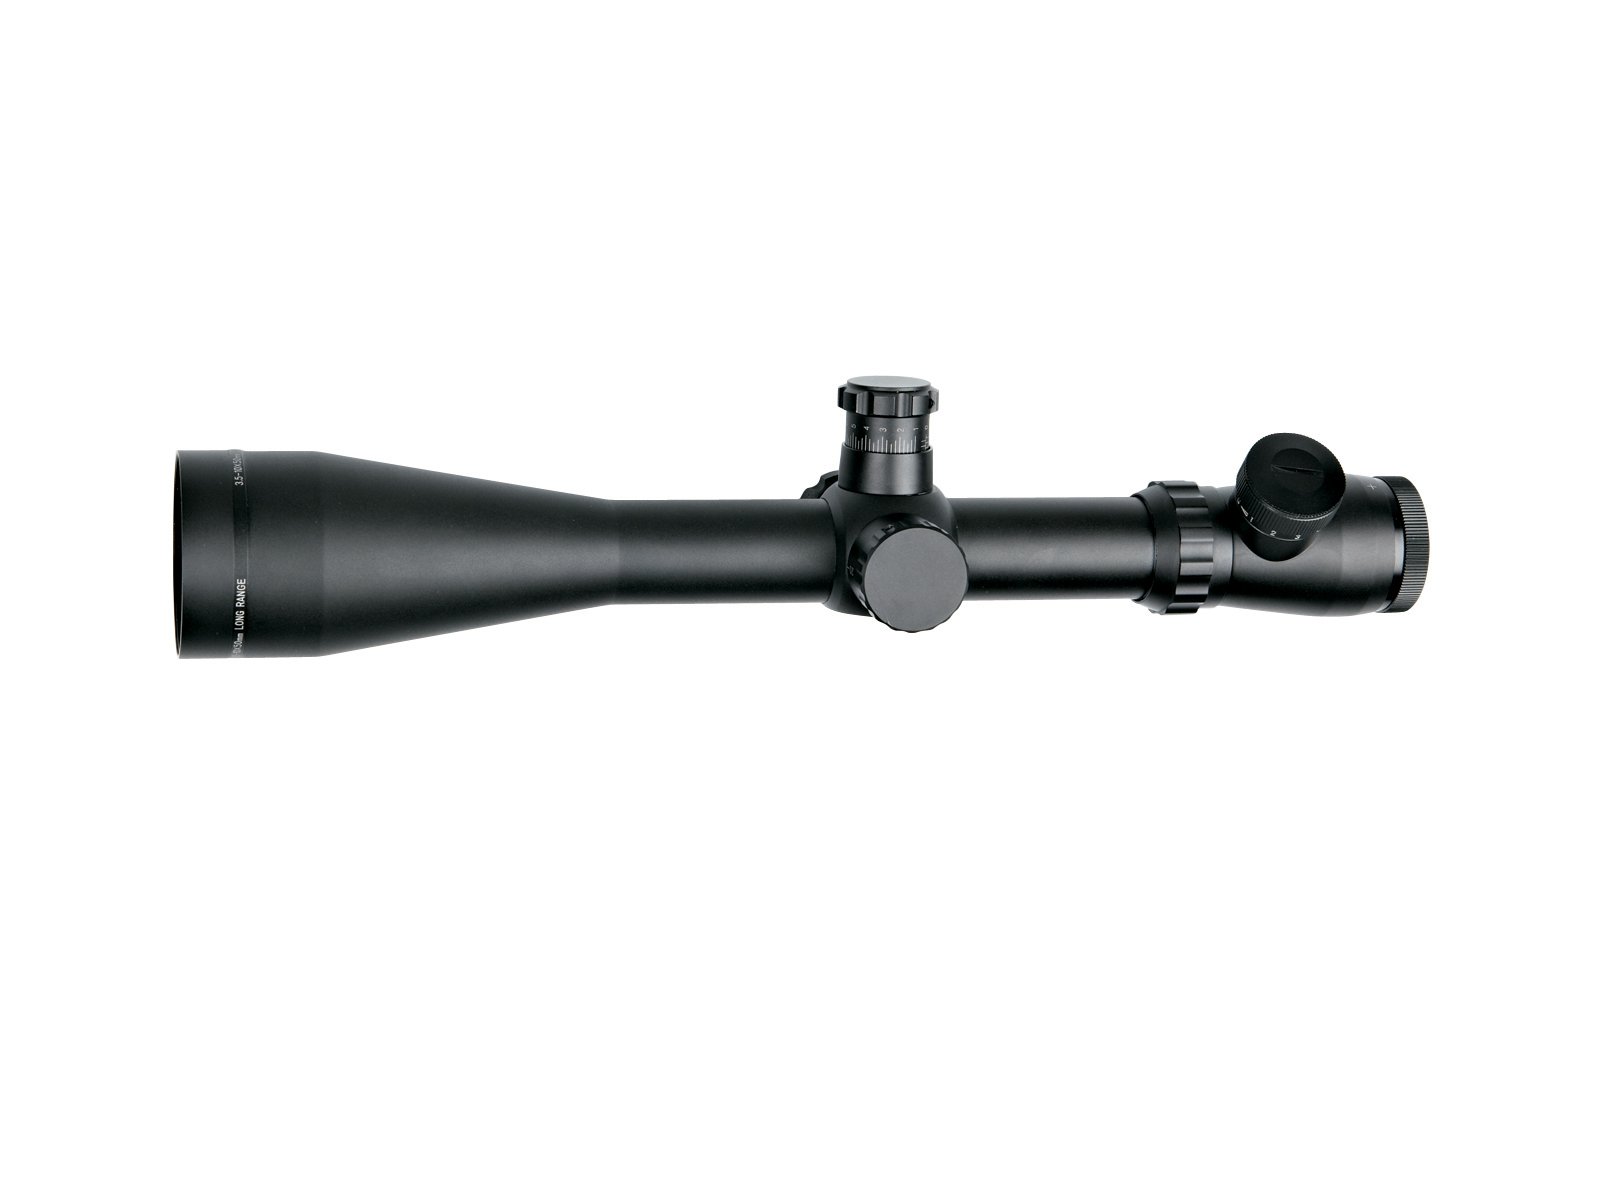 3.5-10 X 50E Advanced scope